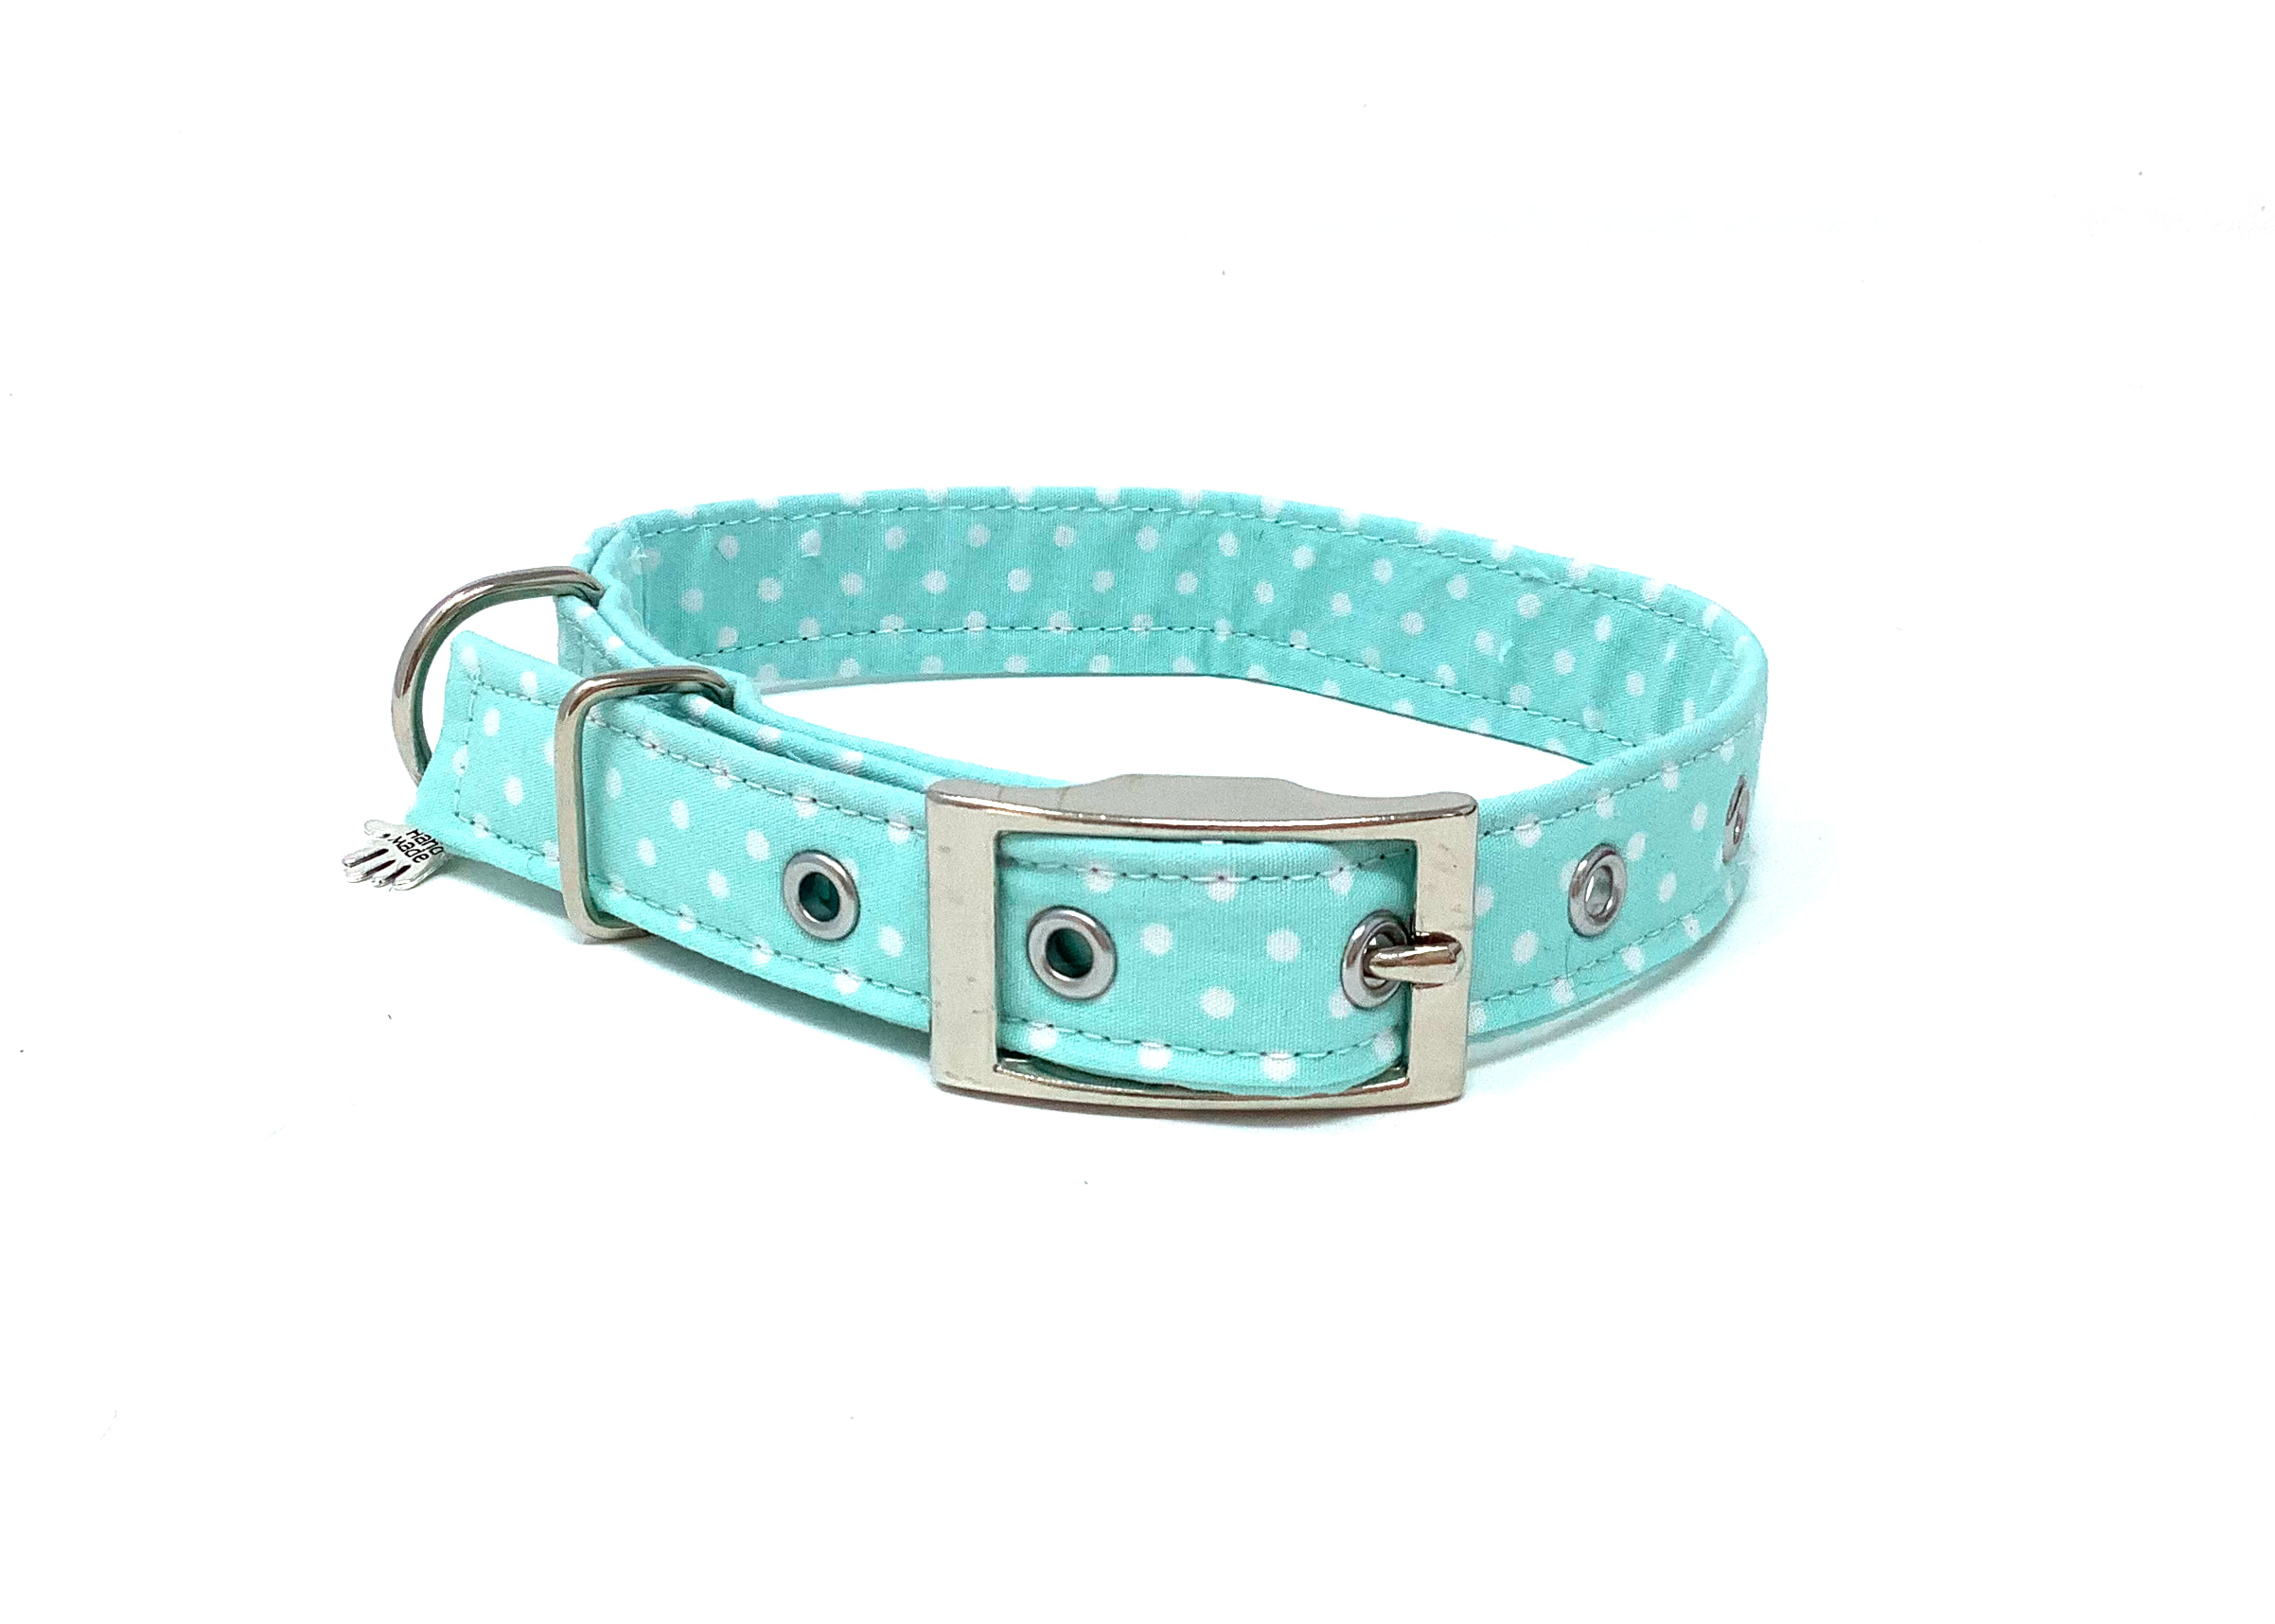 Polka Dot Dog Lead Size 0.375 x 60 Color Green Blue